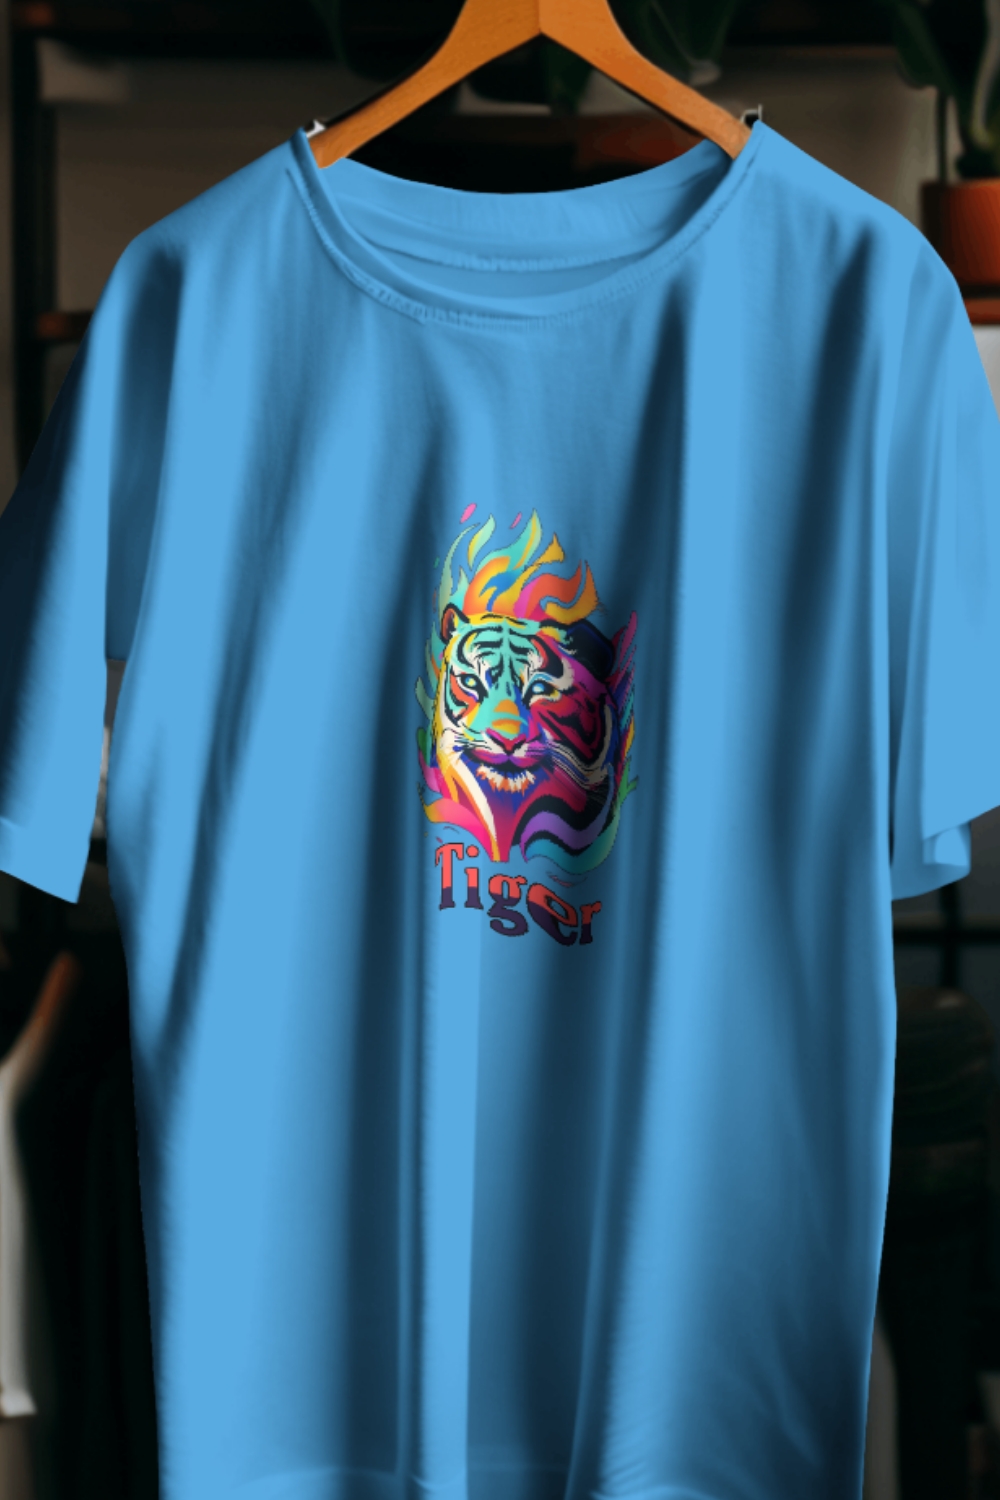 Tiger big weve animal design and has a designation T-Shirt pinterest preview image.